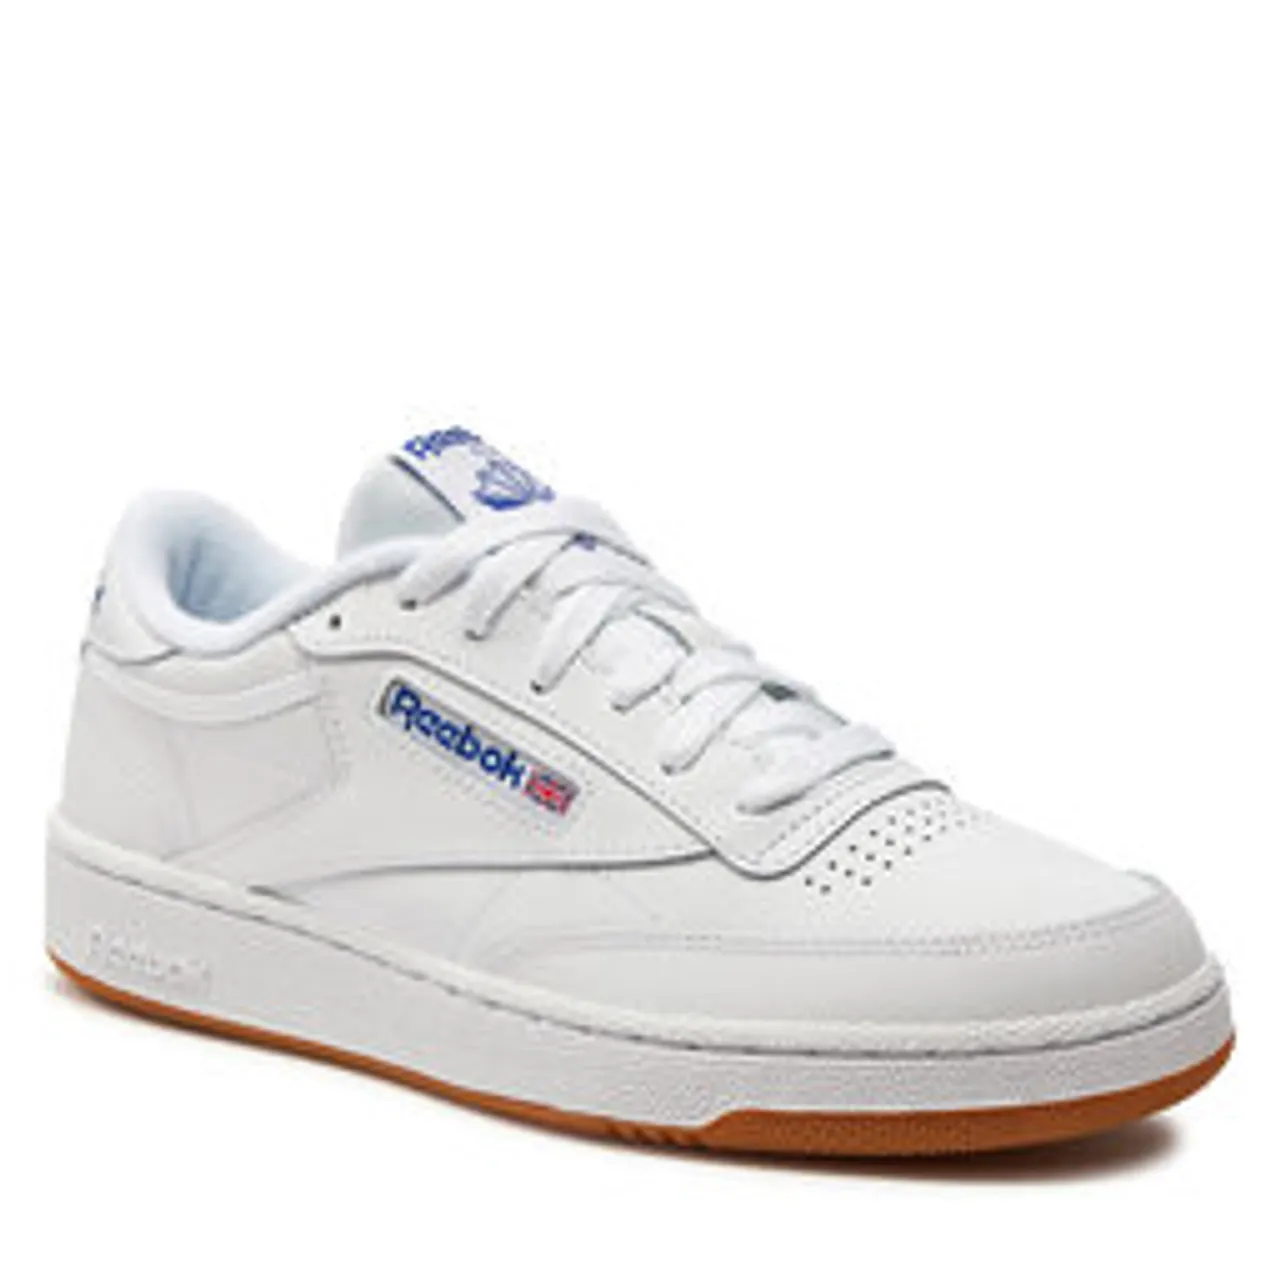 Schuhe Reebok Club C 85 AR0459 White/Royal/Gum